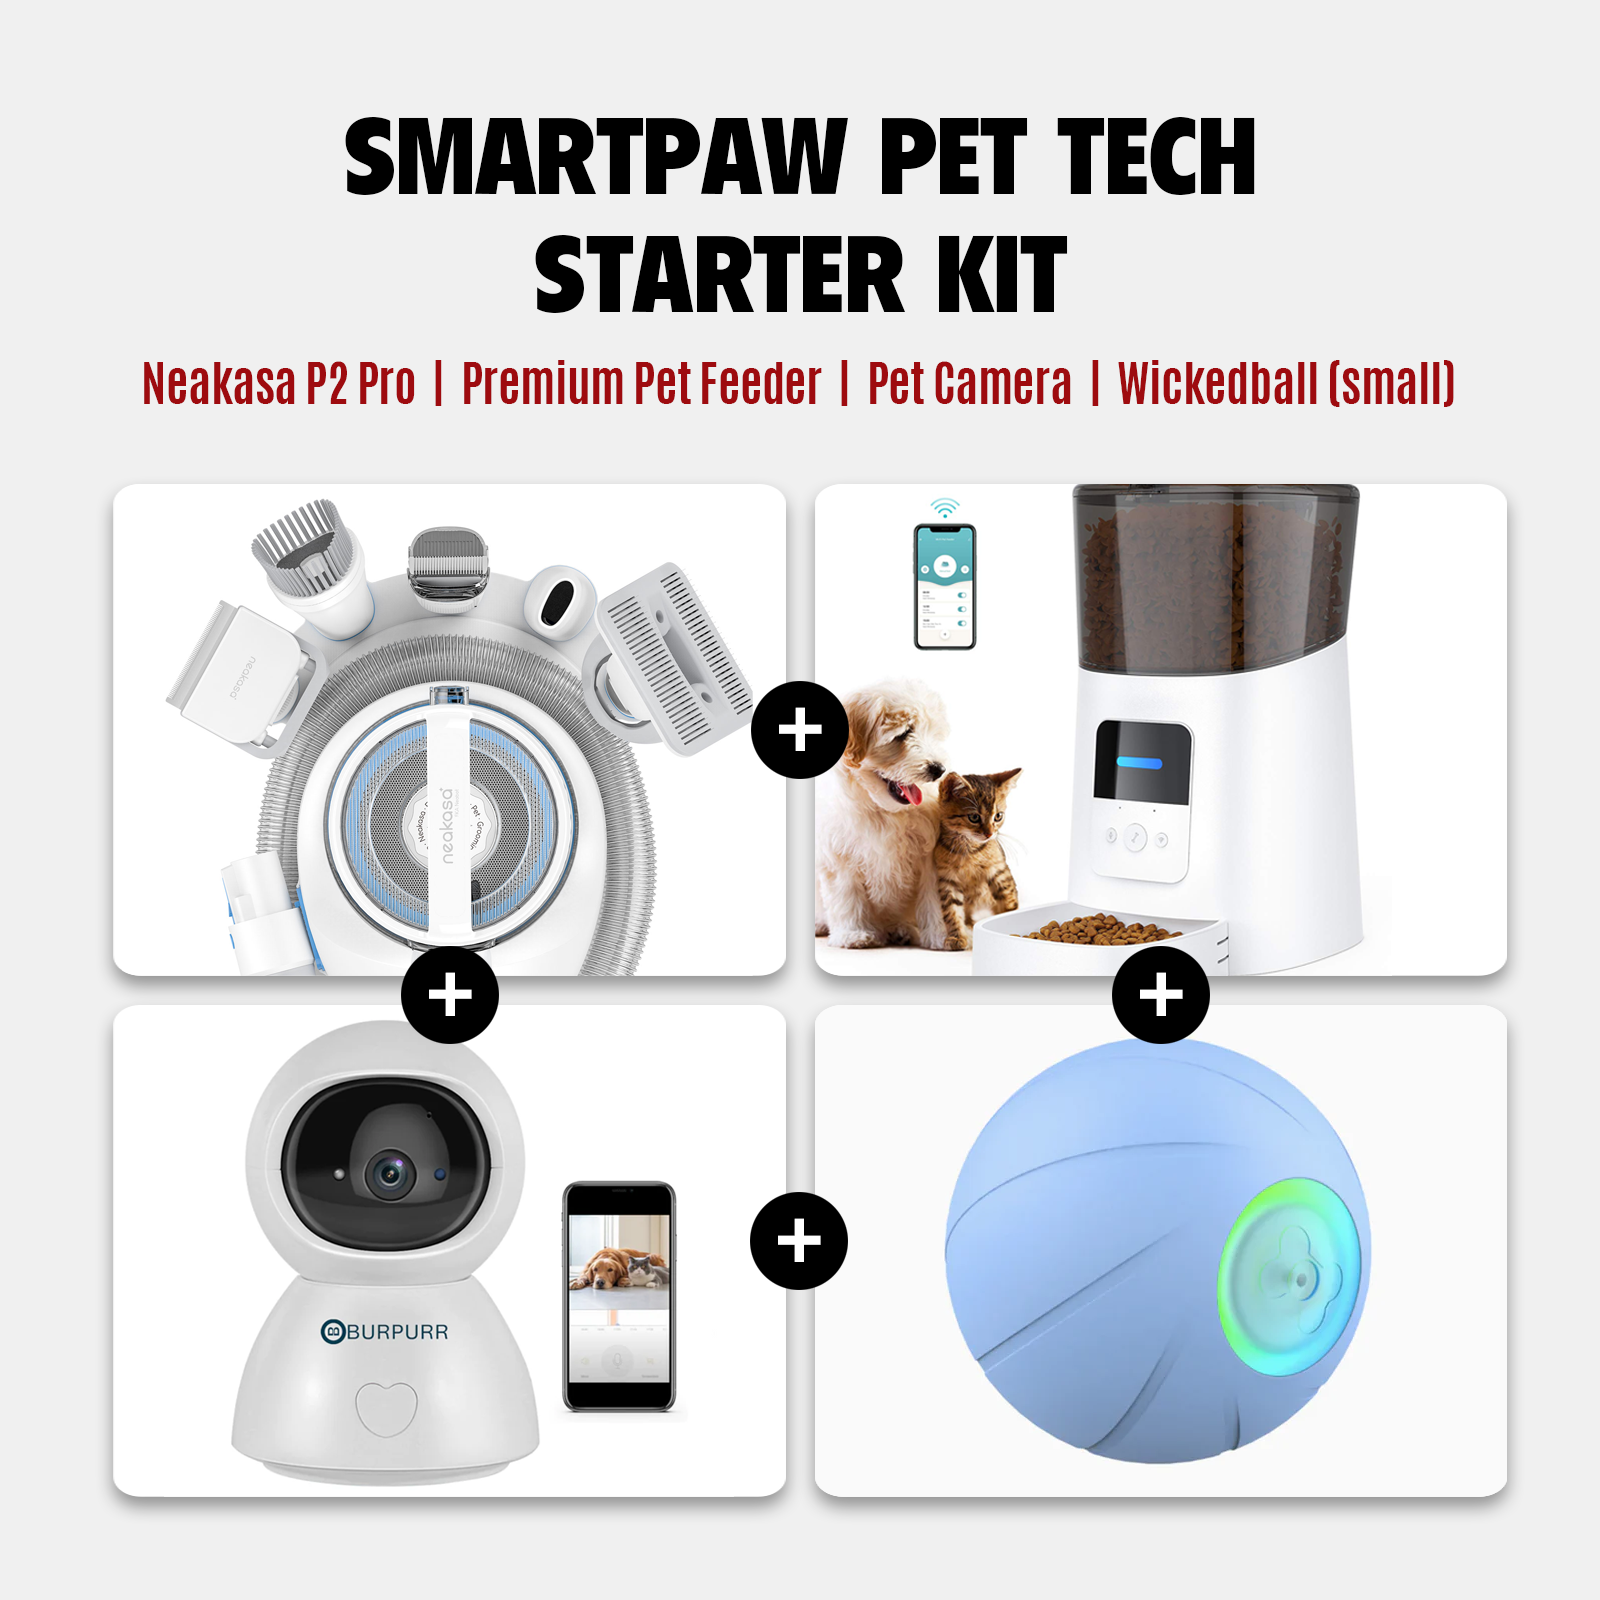 Smartpaw Pet Tech Starter Kit